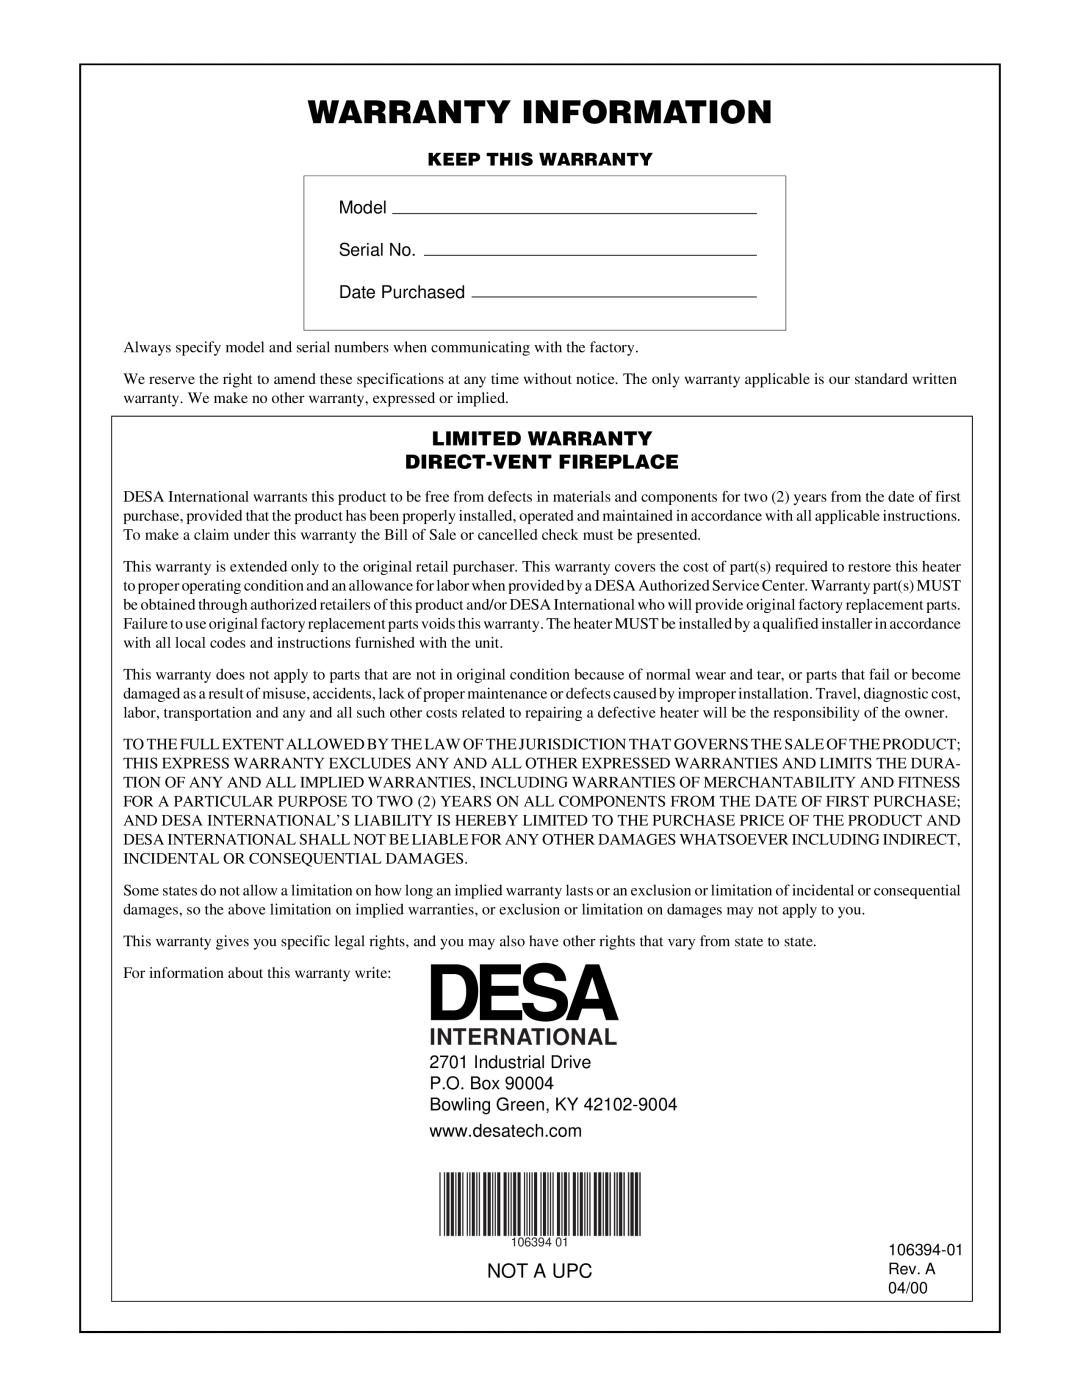 Desa DVFH34P installation manual Warranty Information, International, Limited Warranty Direct-Ventfireplace, Not A Upc 